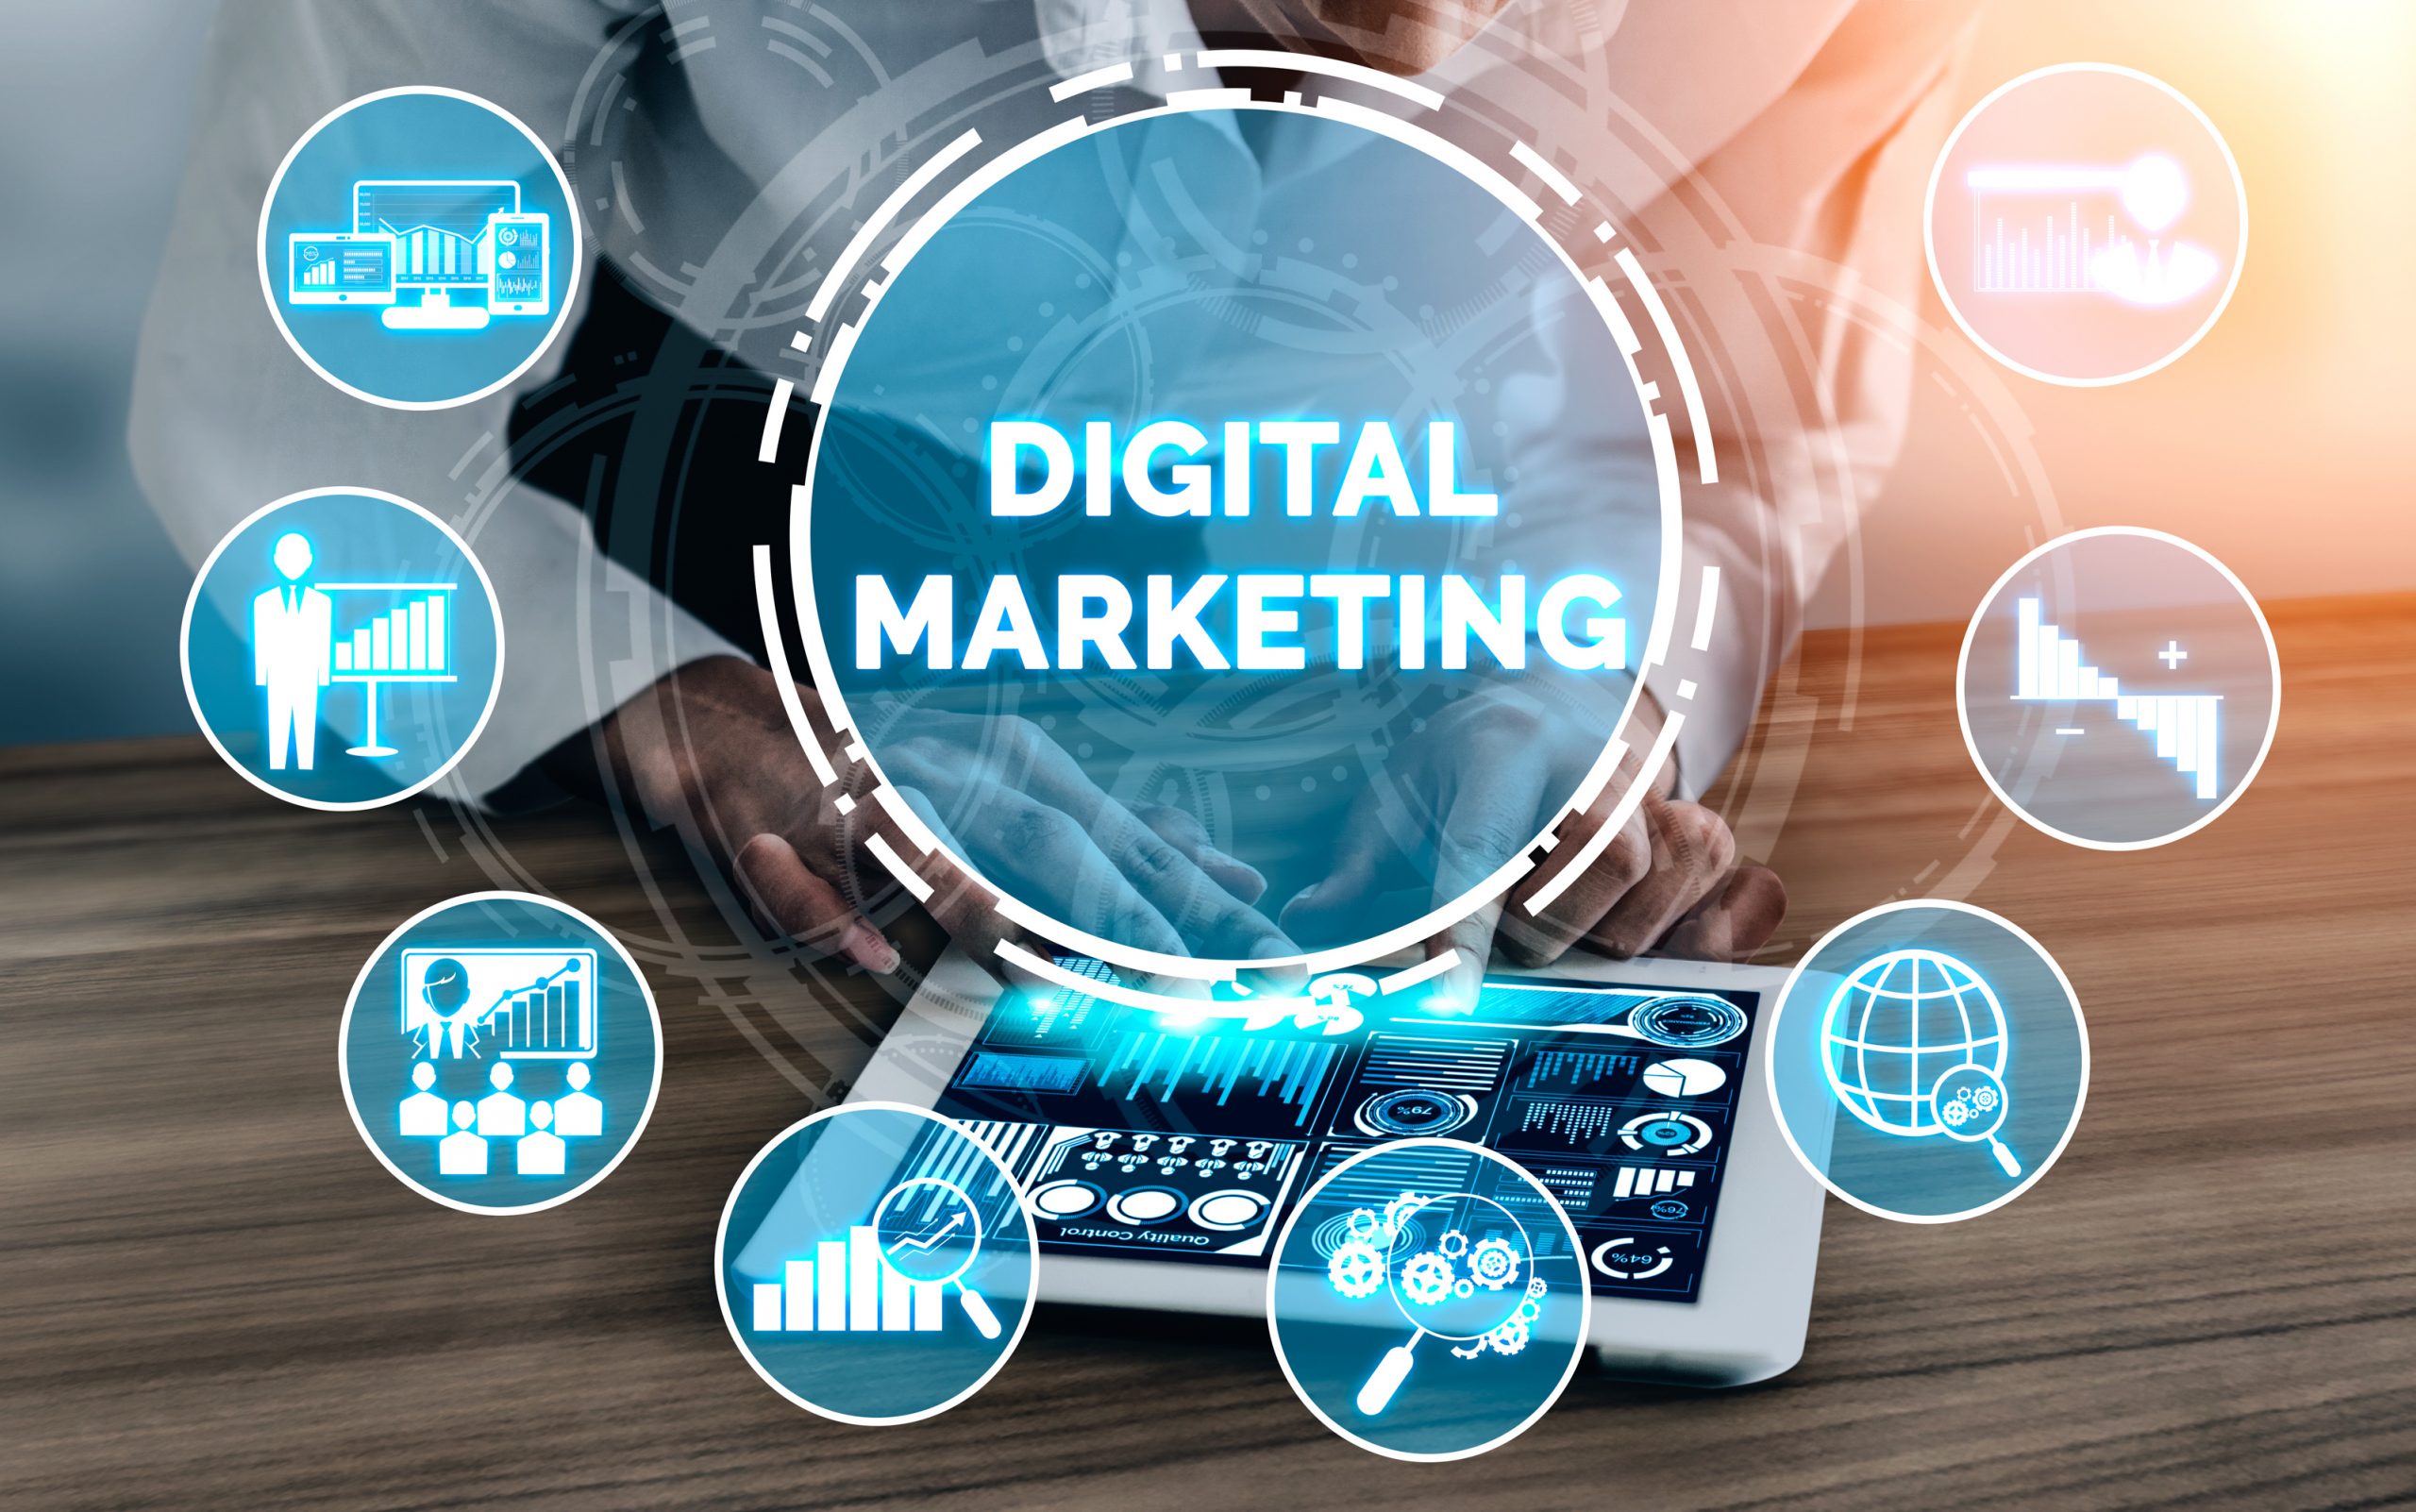 Digital Marketing Technology Solution for Online Business Concept